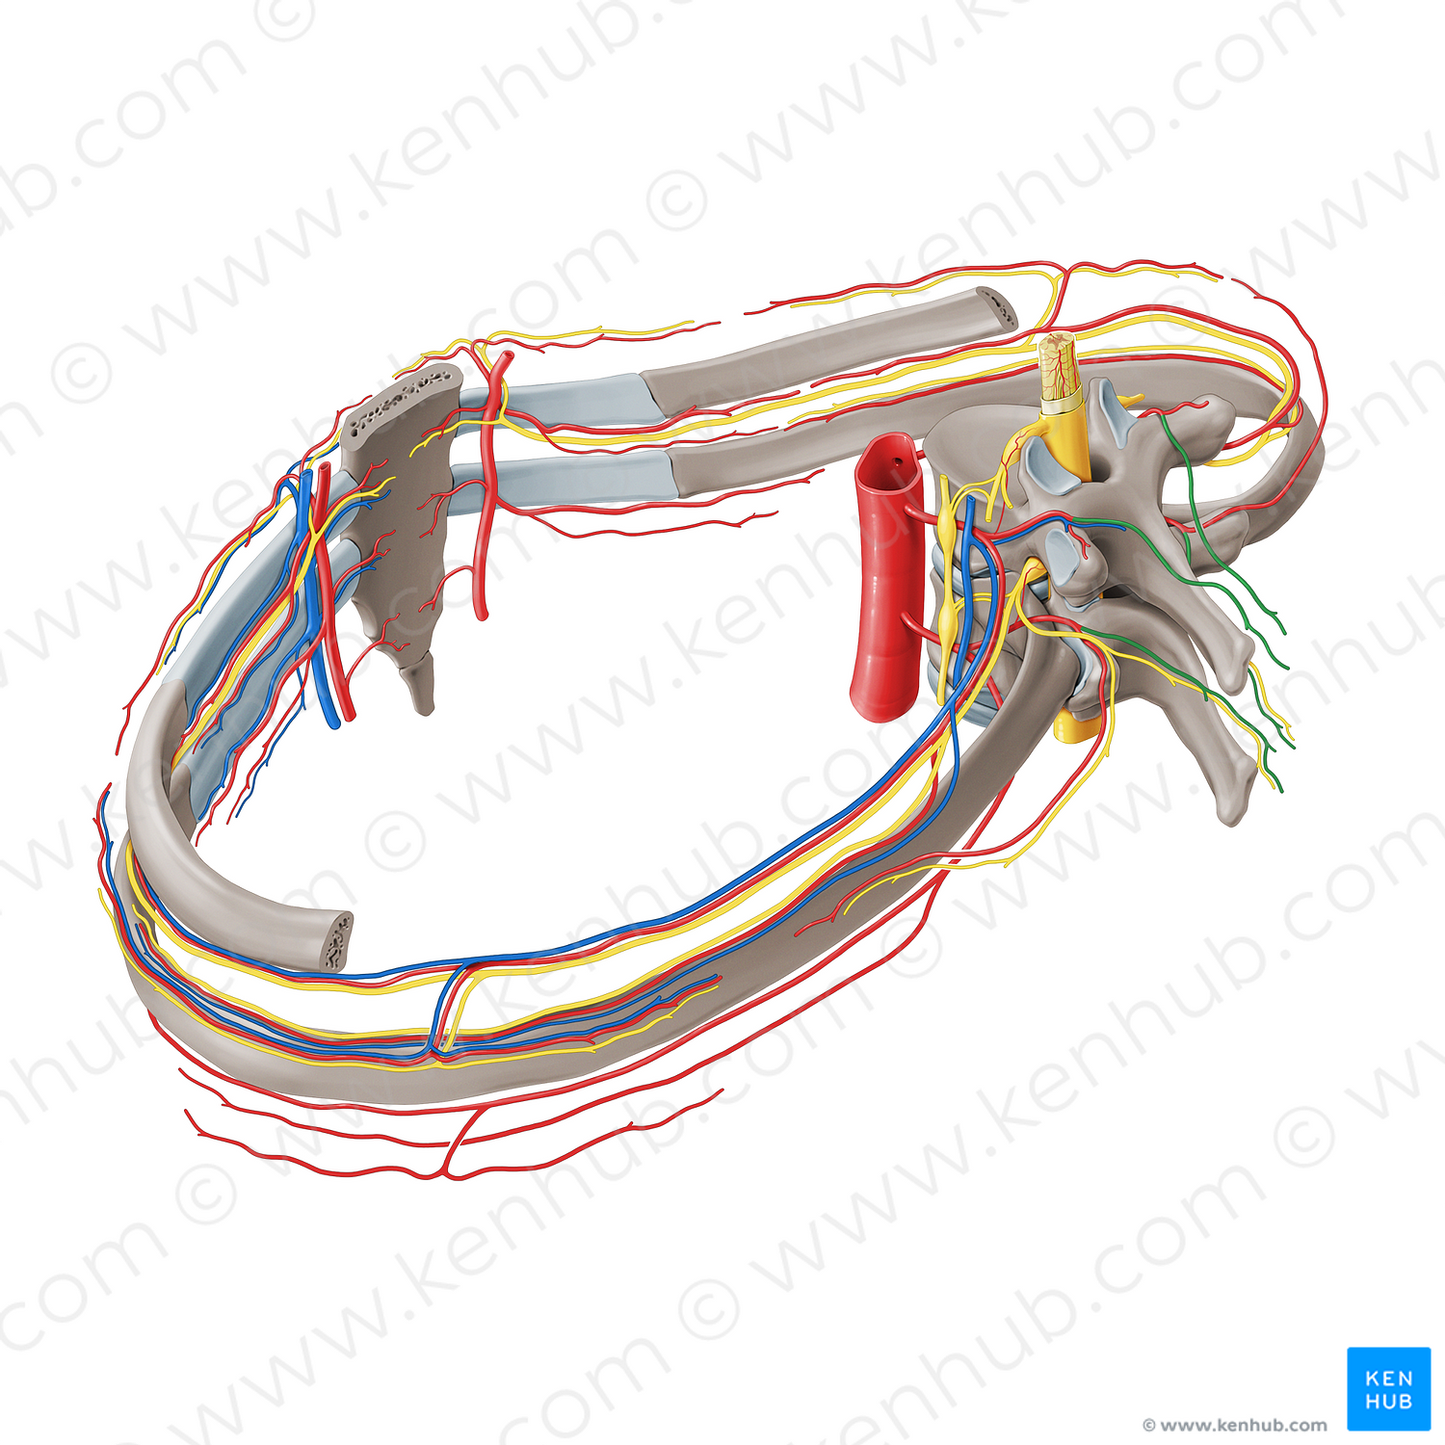 Medial dorsal cutaneous branch of posterior intercostal artery (#19724)